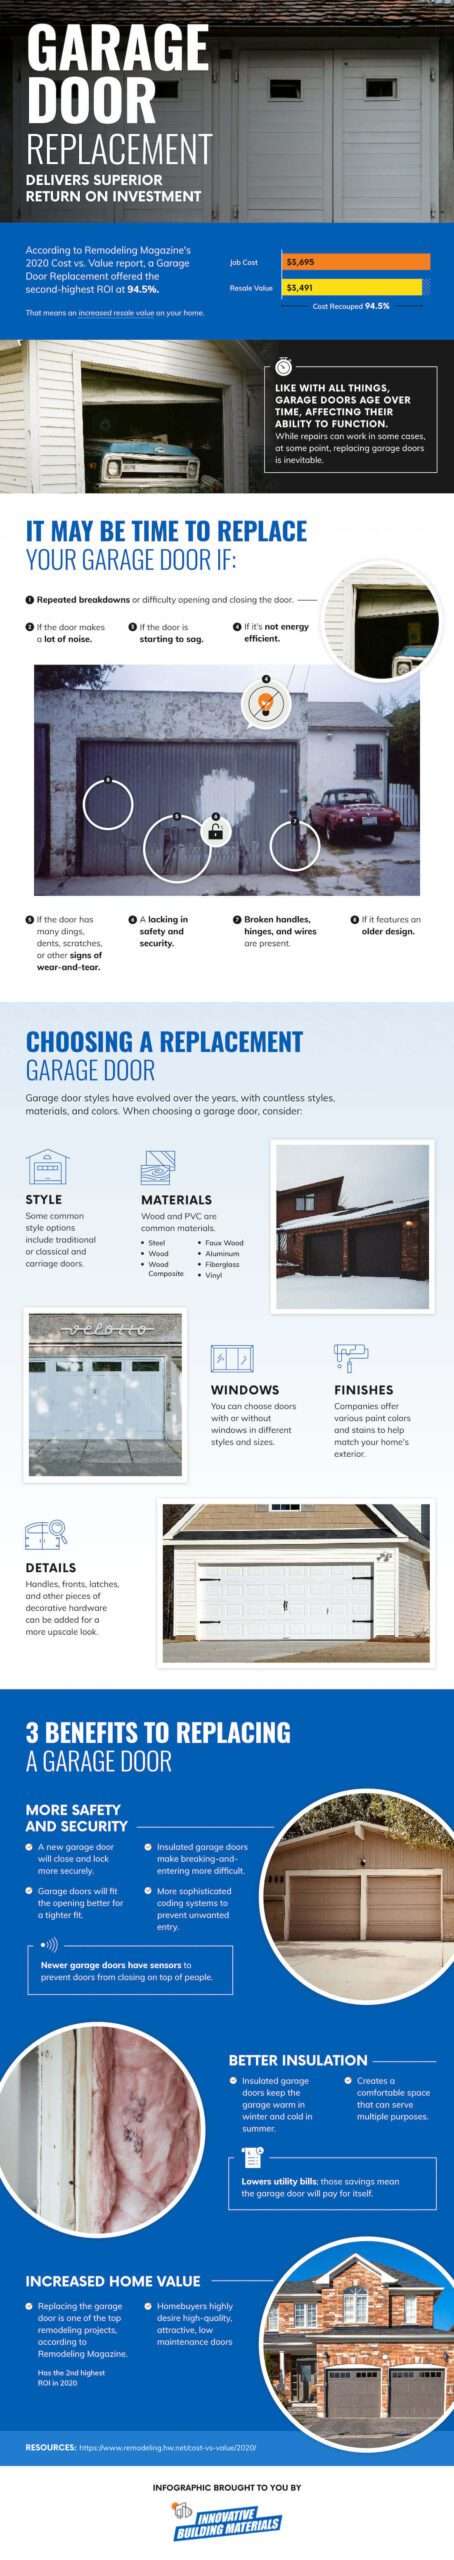 garage-door-replacement-superior-roi-infographic